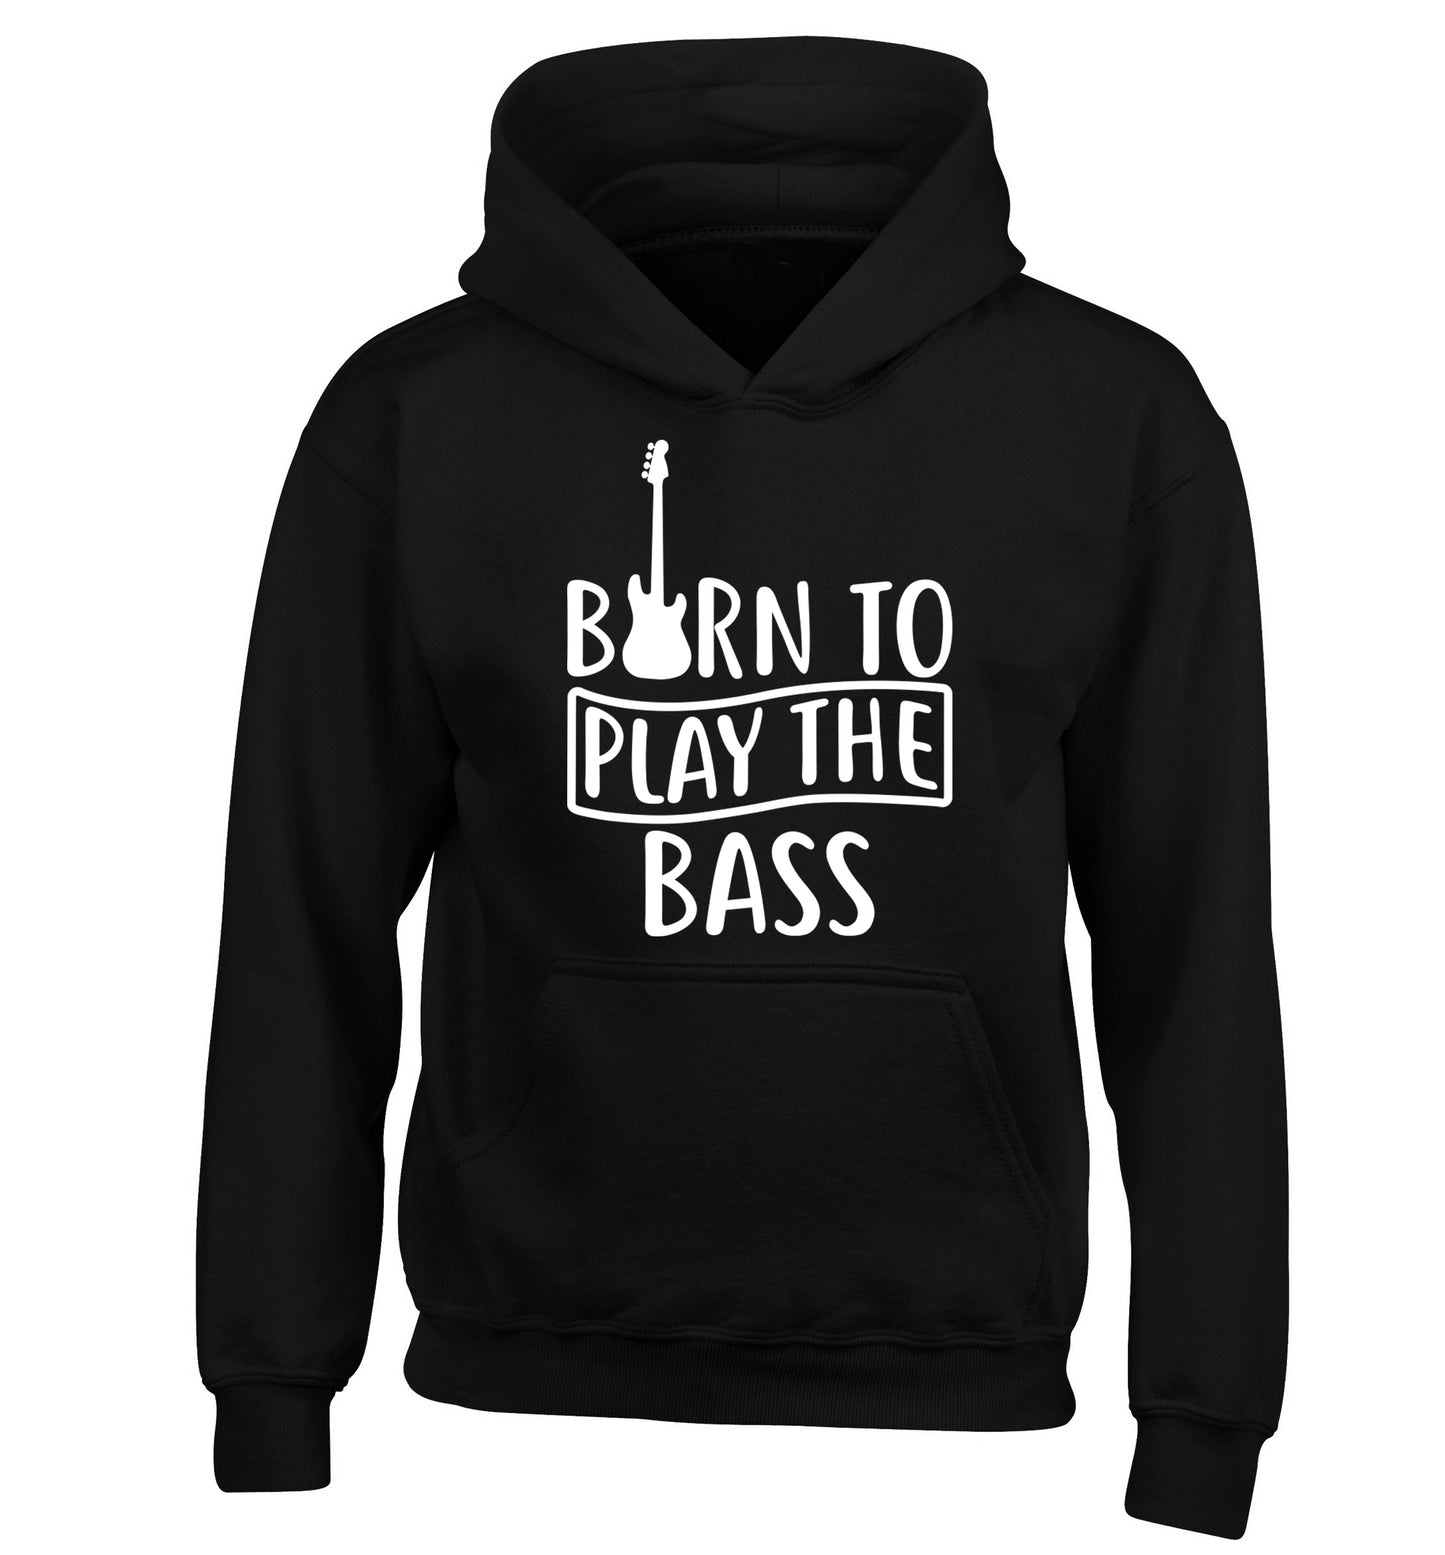 Born to play the bass children's black hoodie 12-14 Years